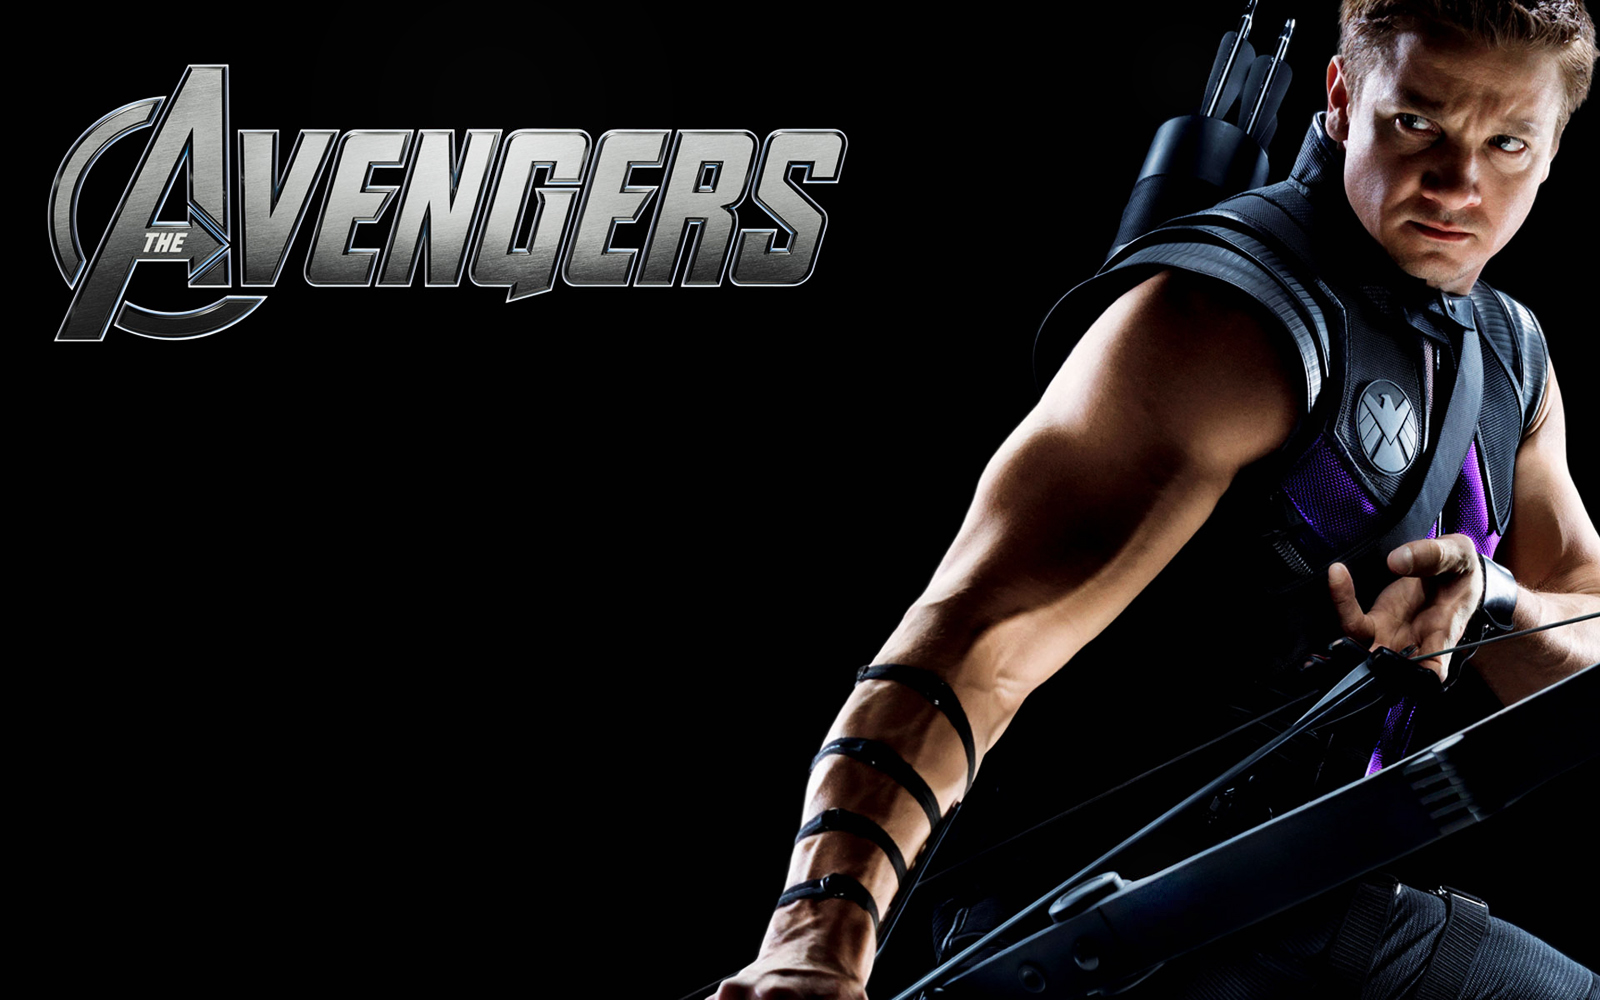 Hawkeye Marvels Avengers Wallpapers